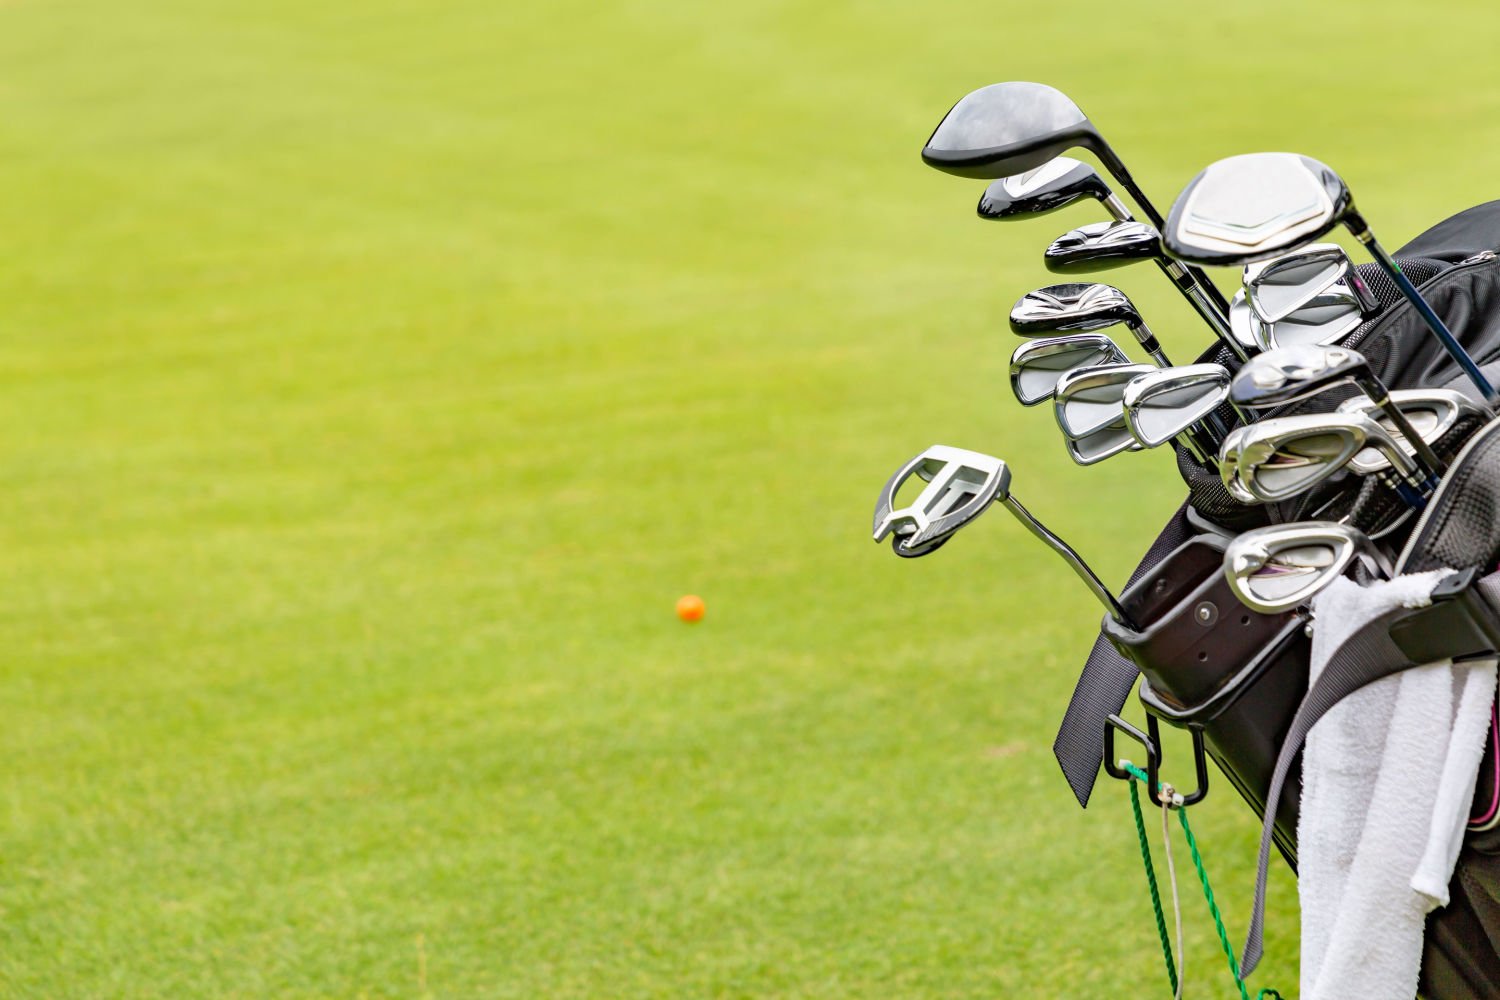 golf bag with golf clubs